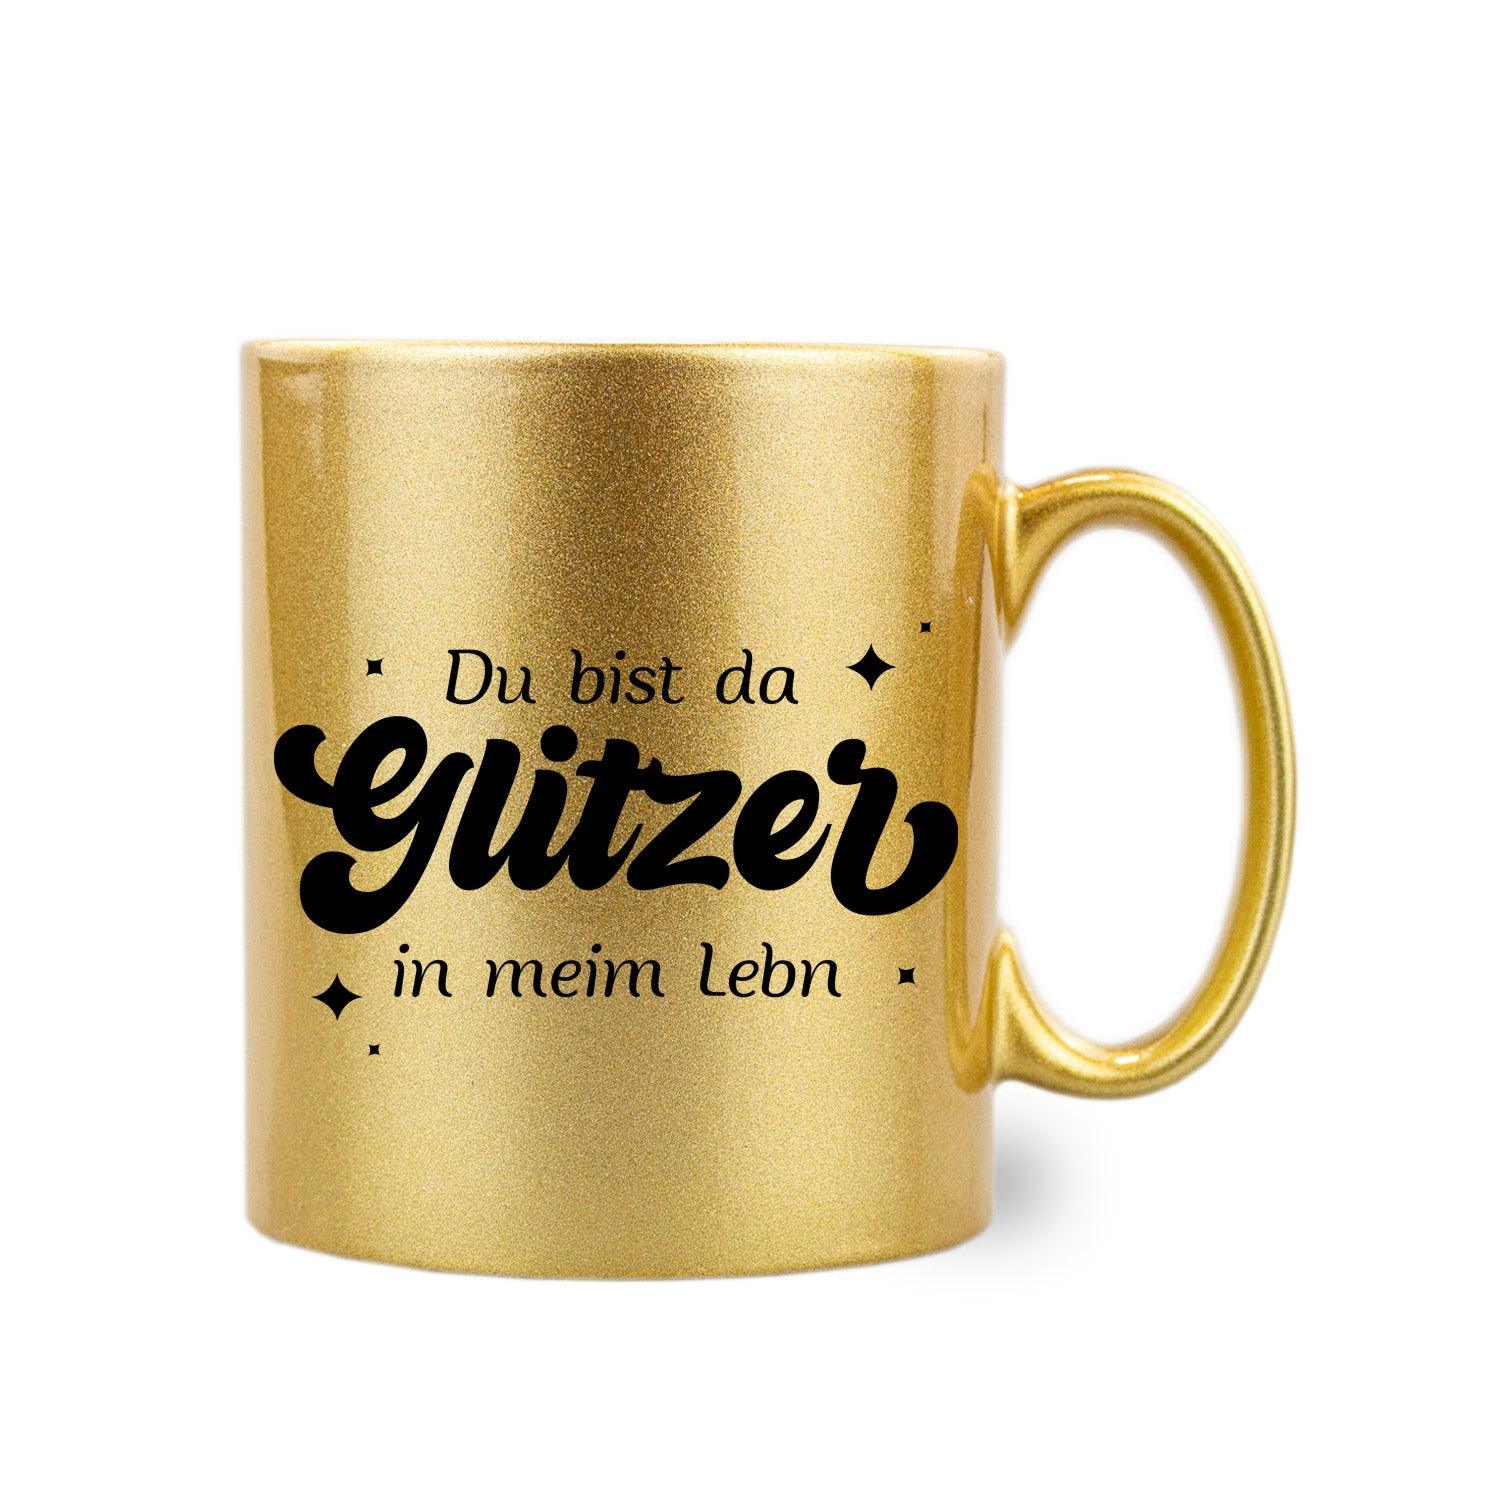 Gold-Glitzer-Haferl "Du bist da Glitzer" - bavariashop - mei LebensGfui